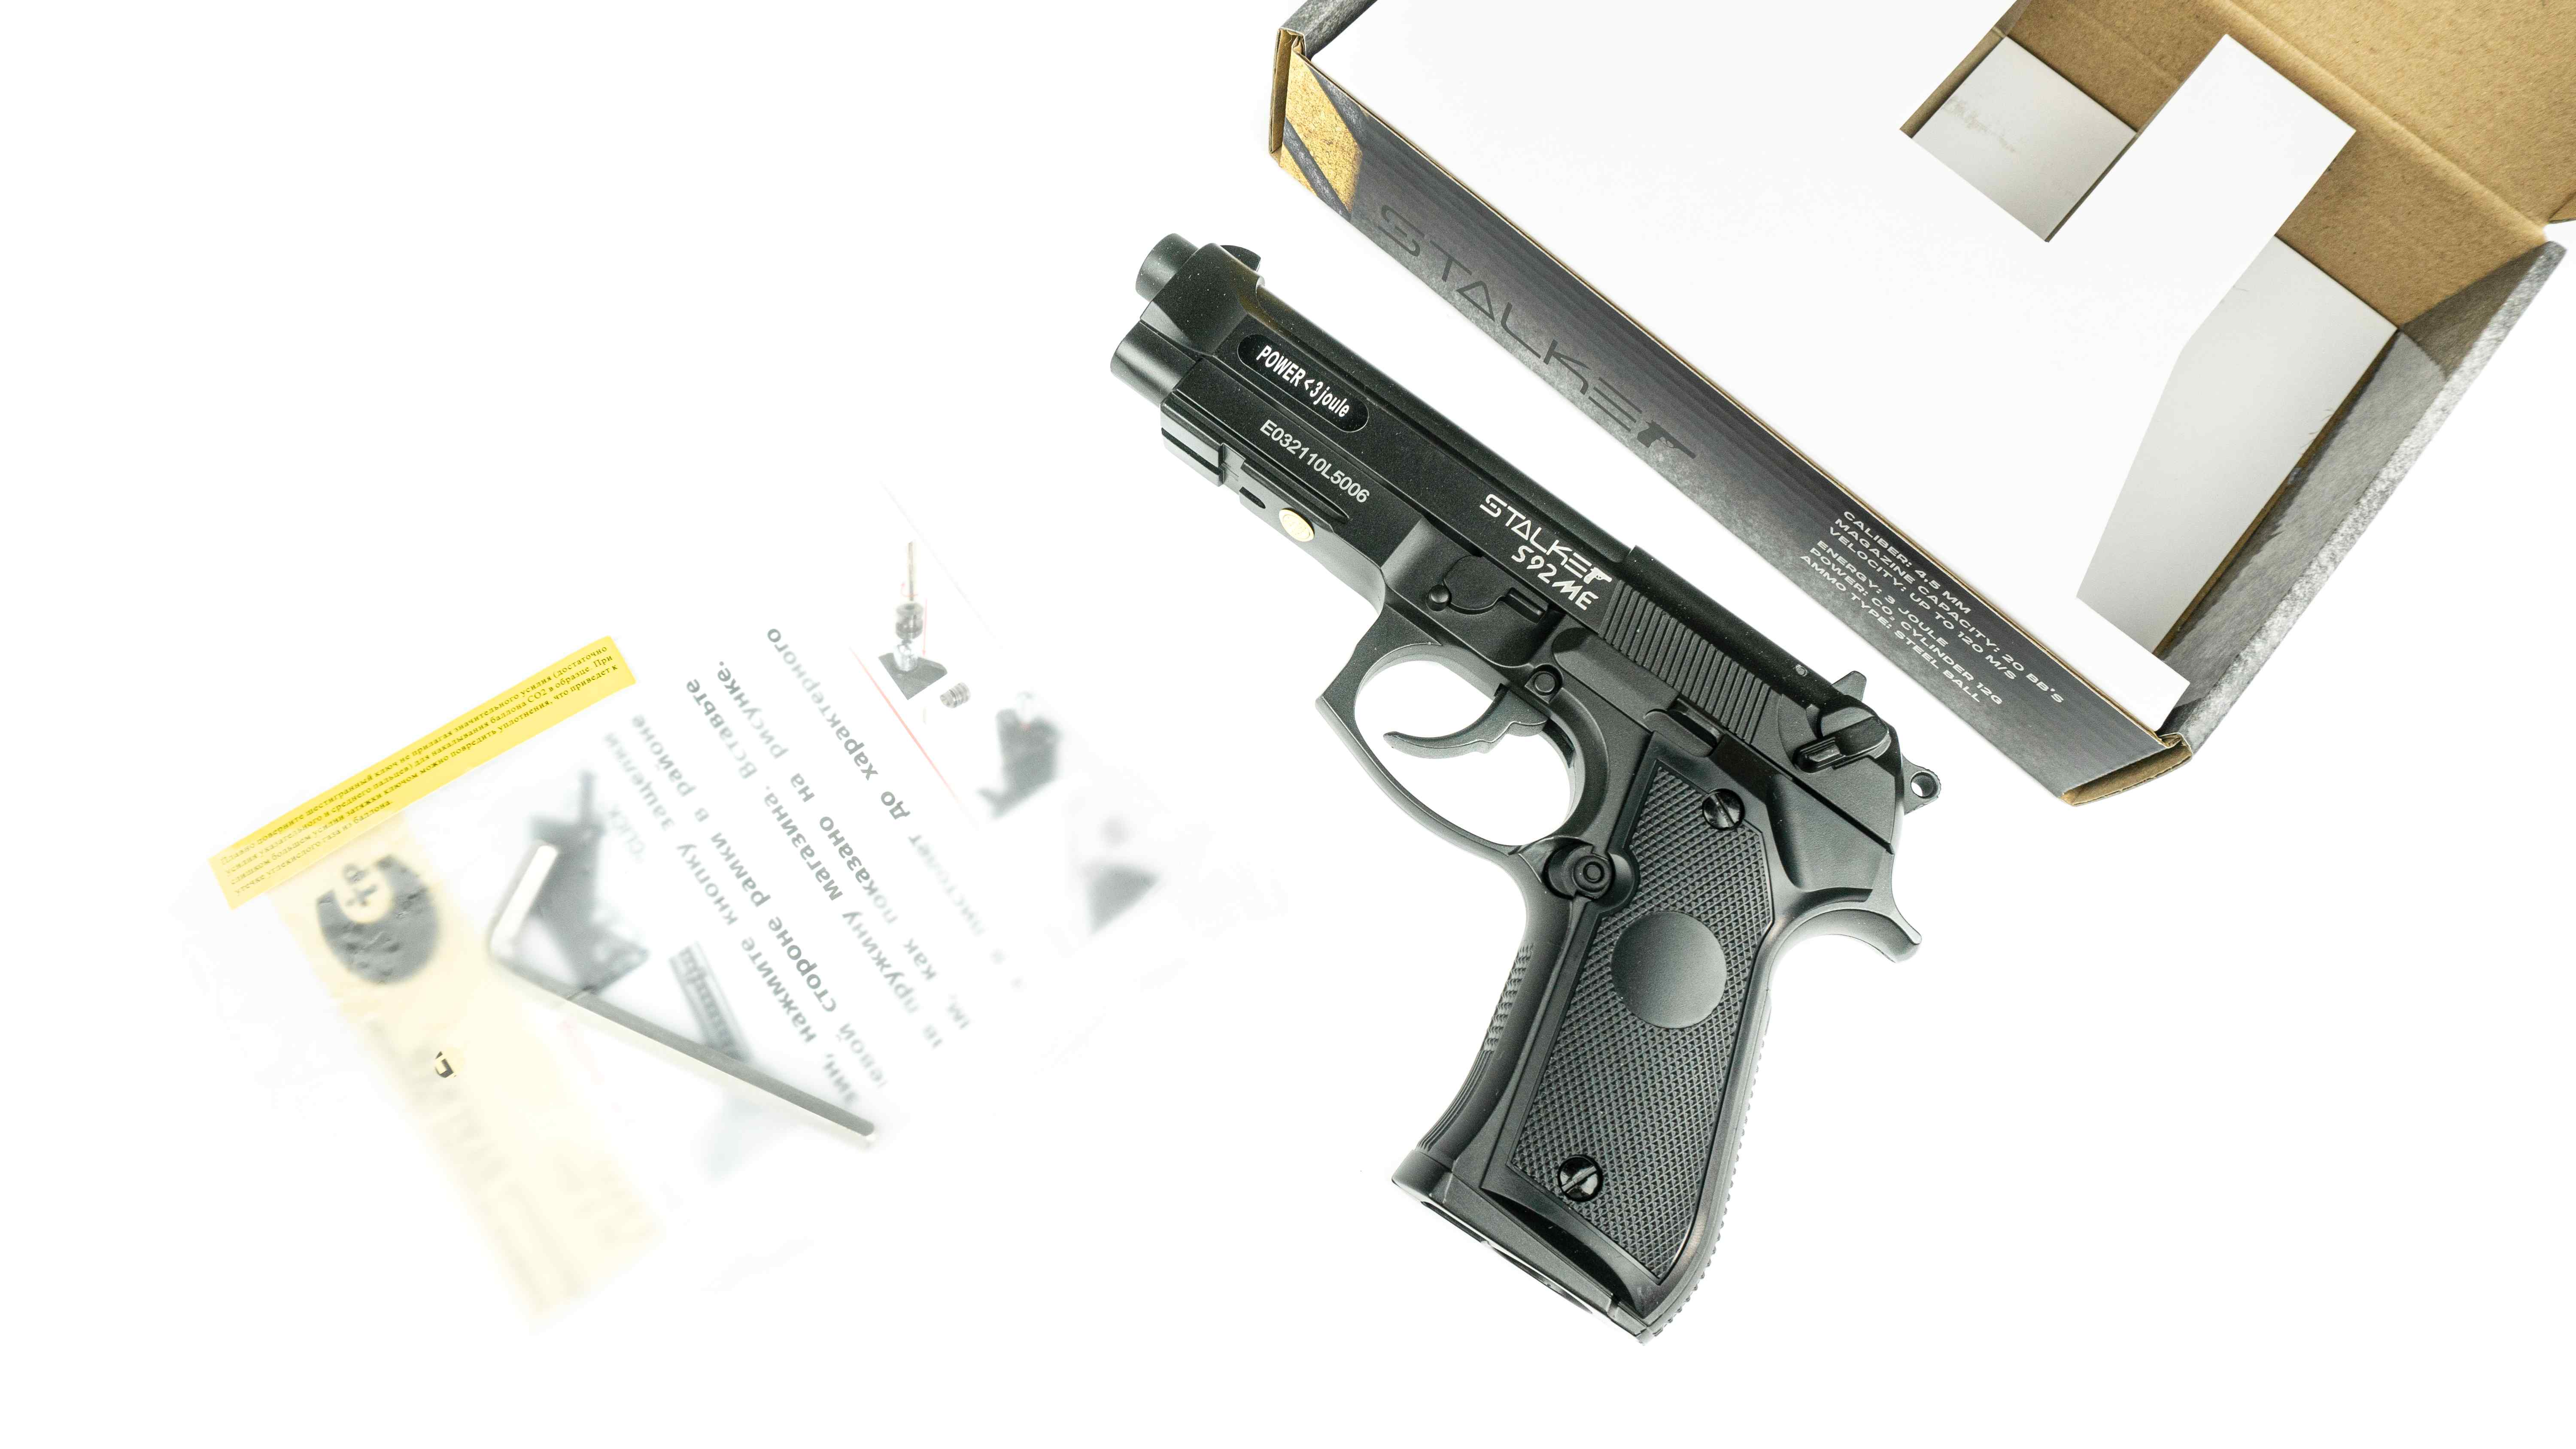 Пневматический пистолет Stalker S92ME (аналог Beretta 92) 4,5 мм